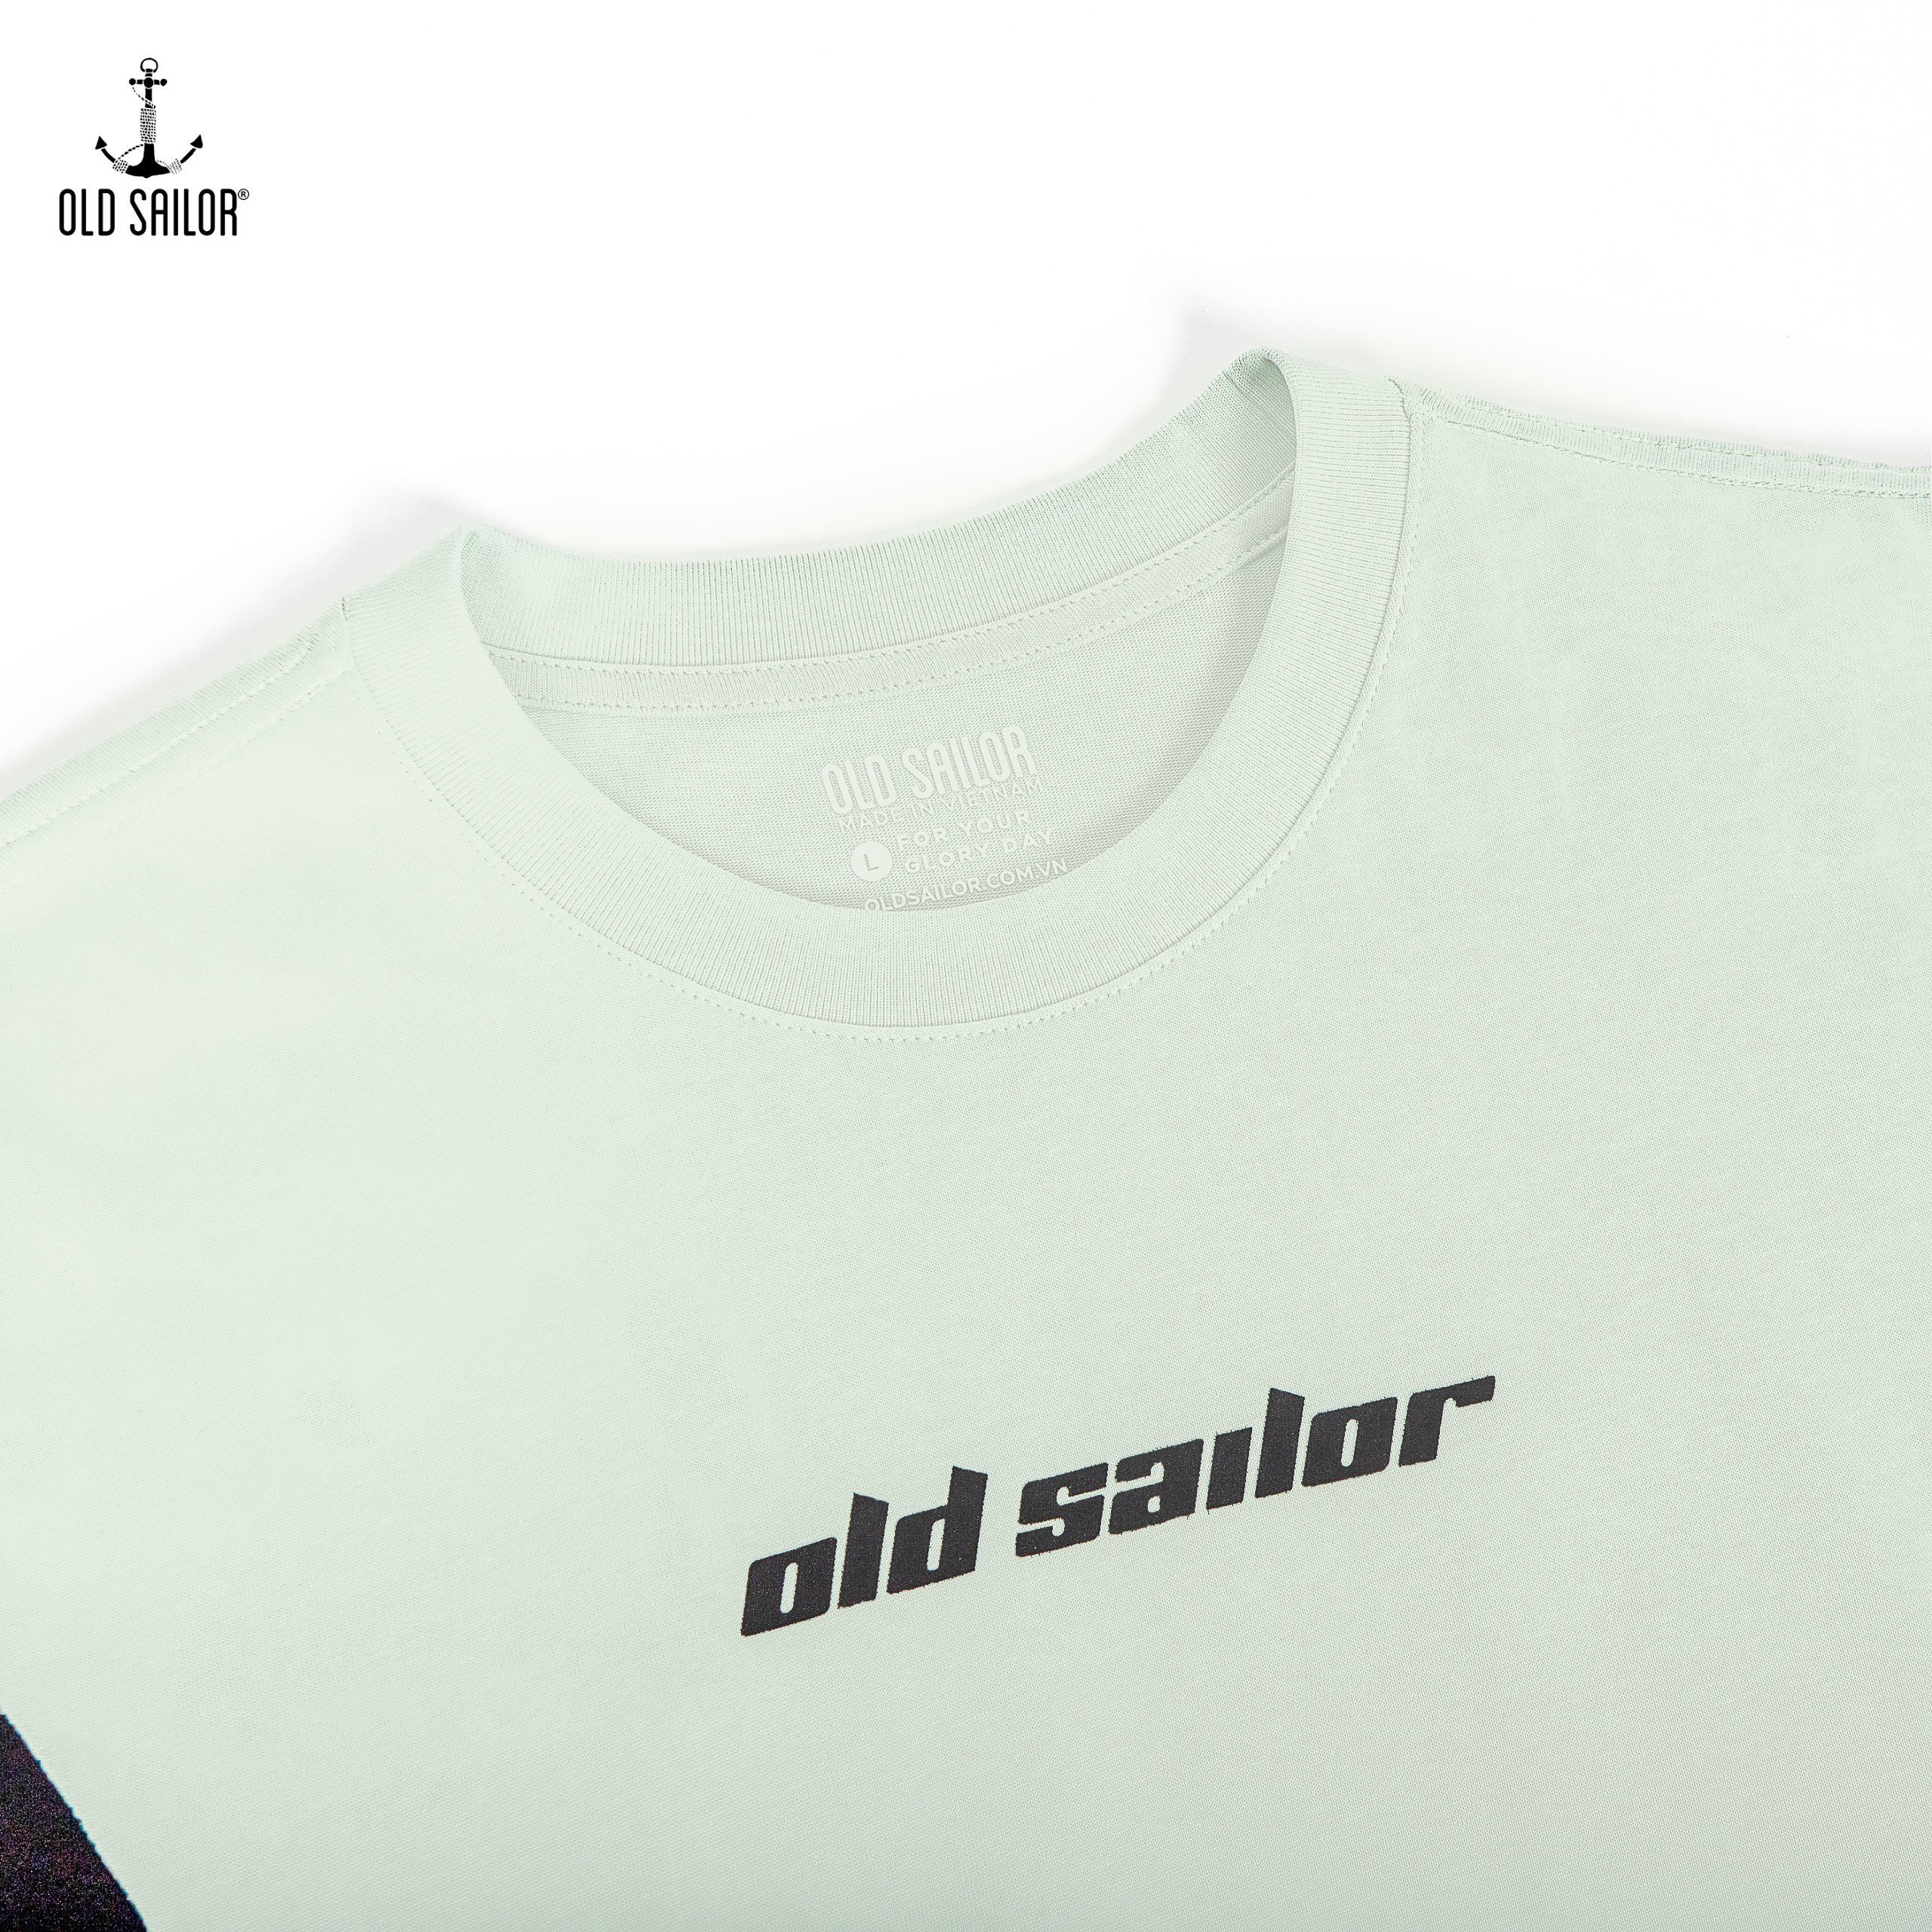 Áo thun block core Old Sailor - ATXA88576 - xanh - Big size upto 5XL